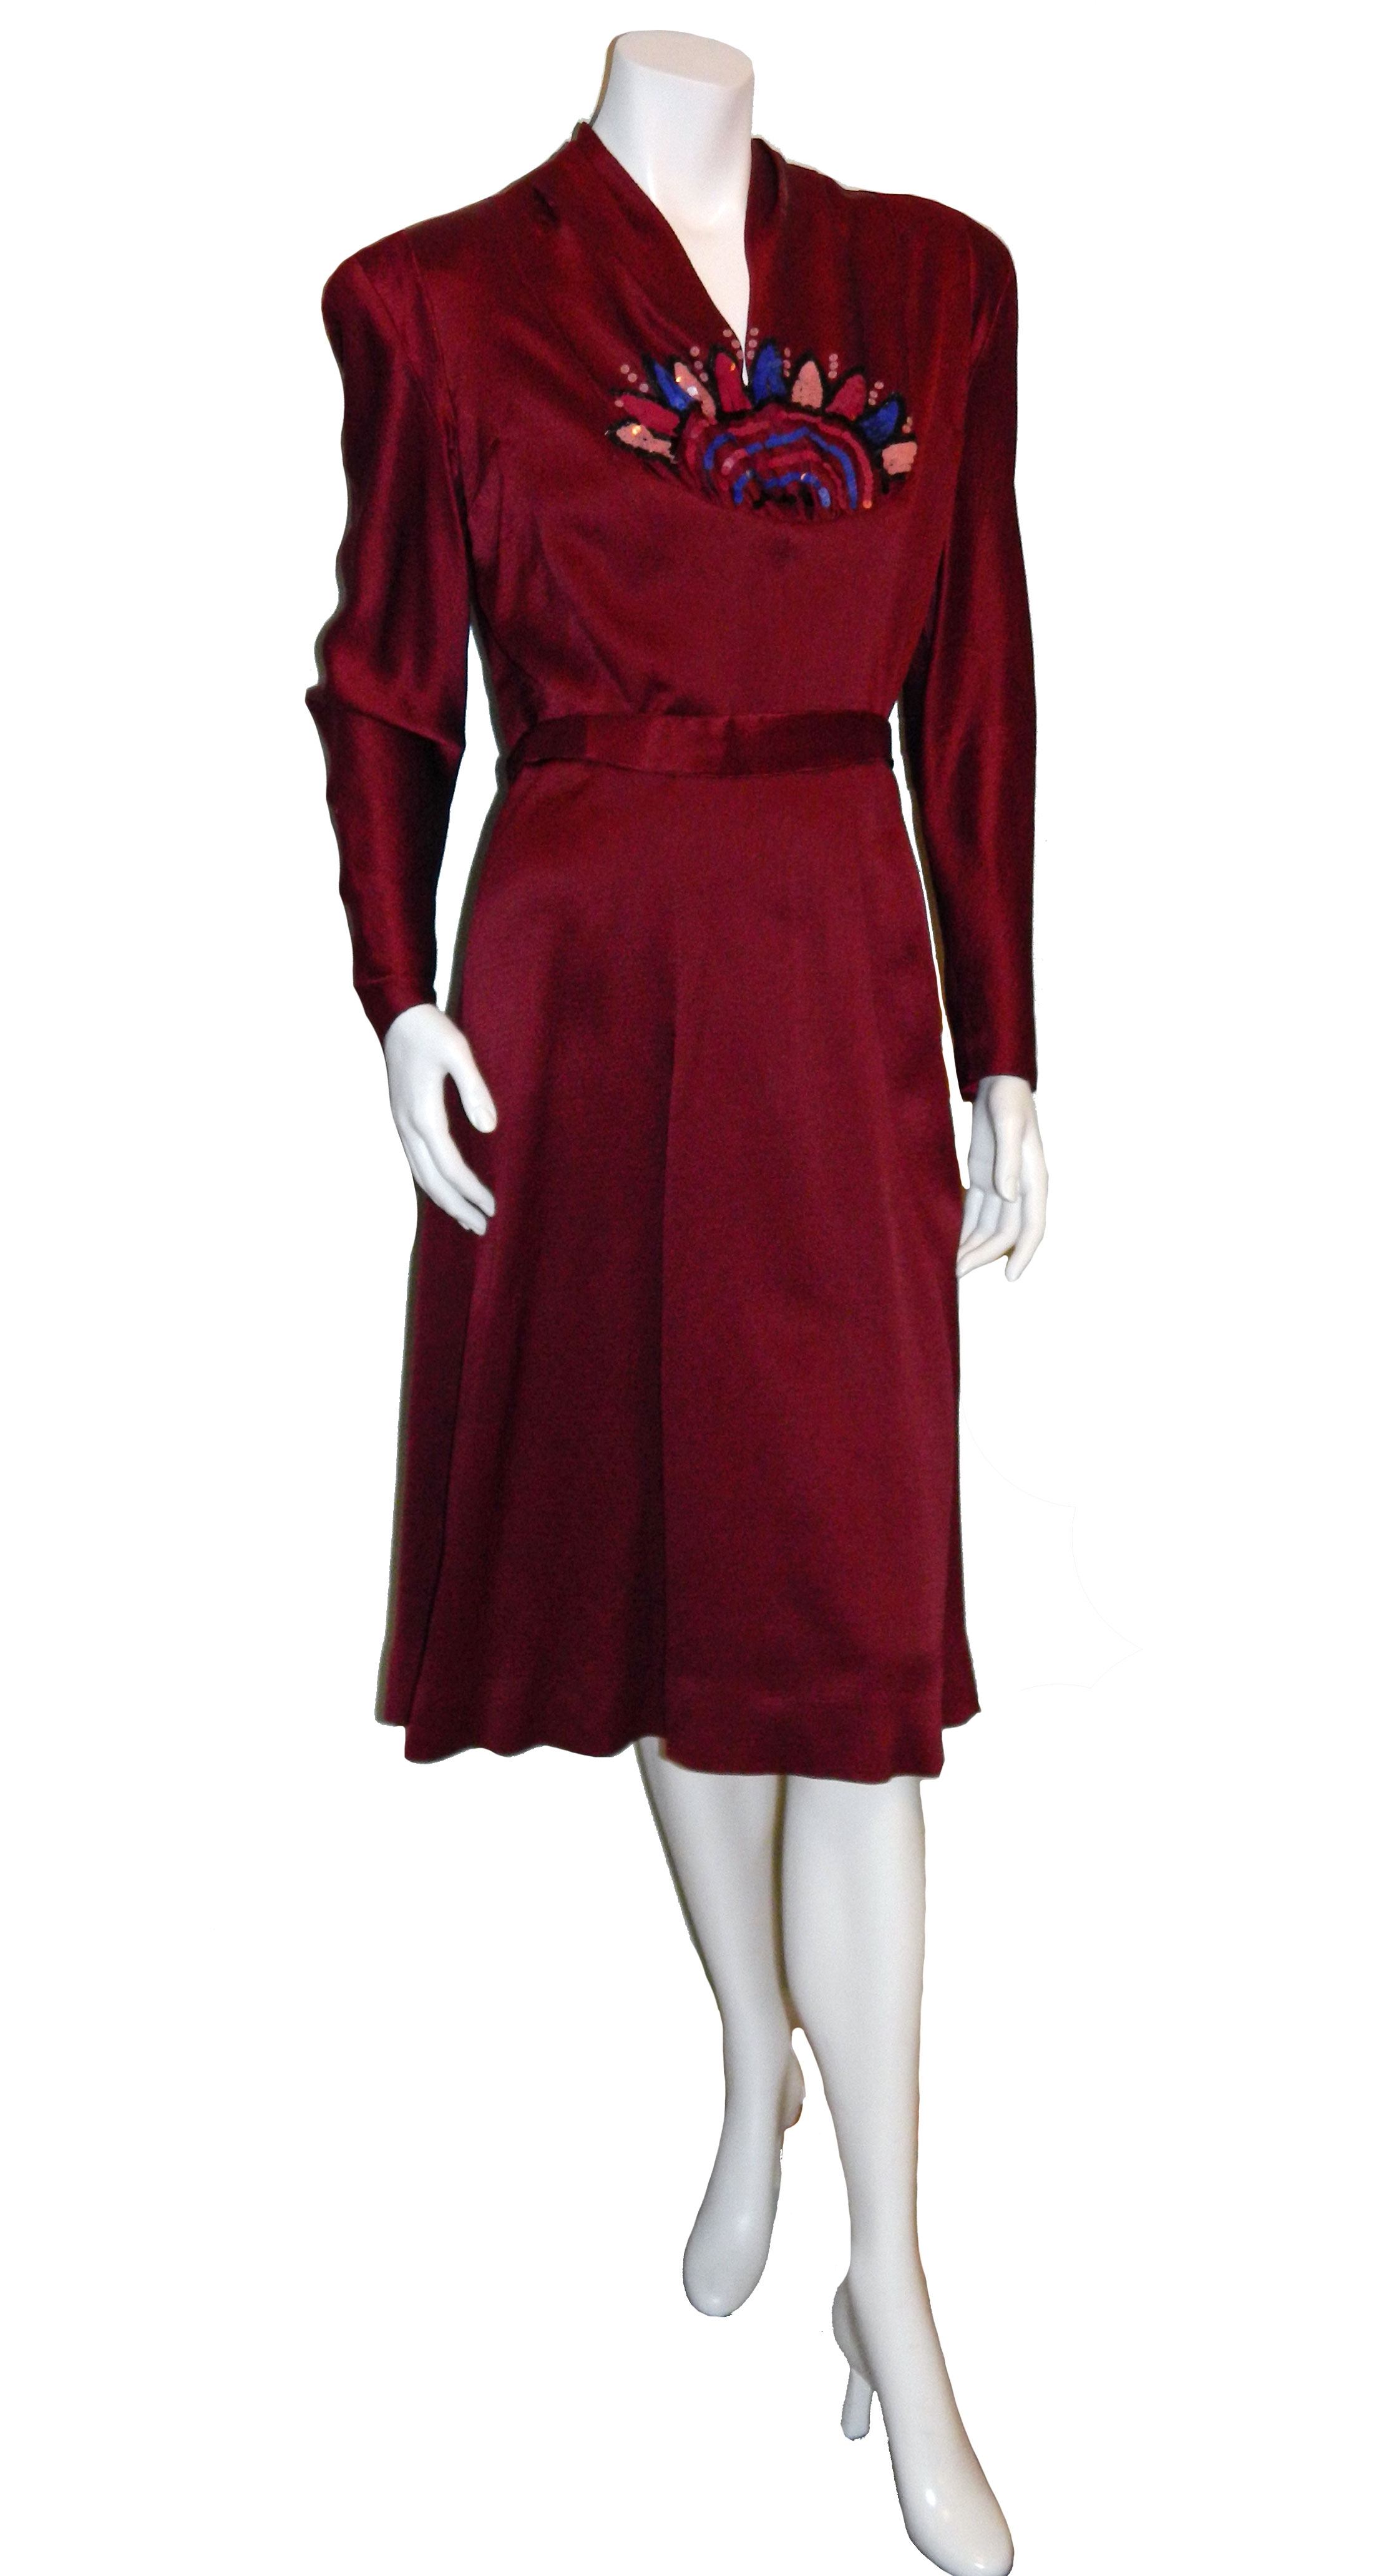 1930s dress